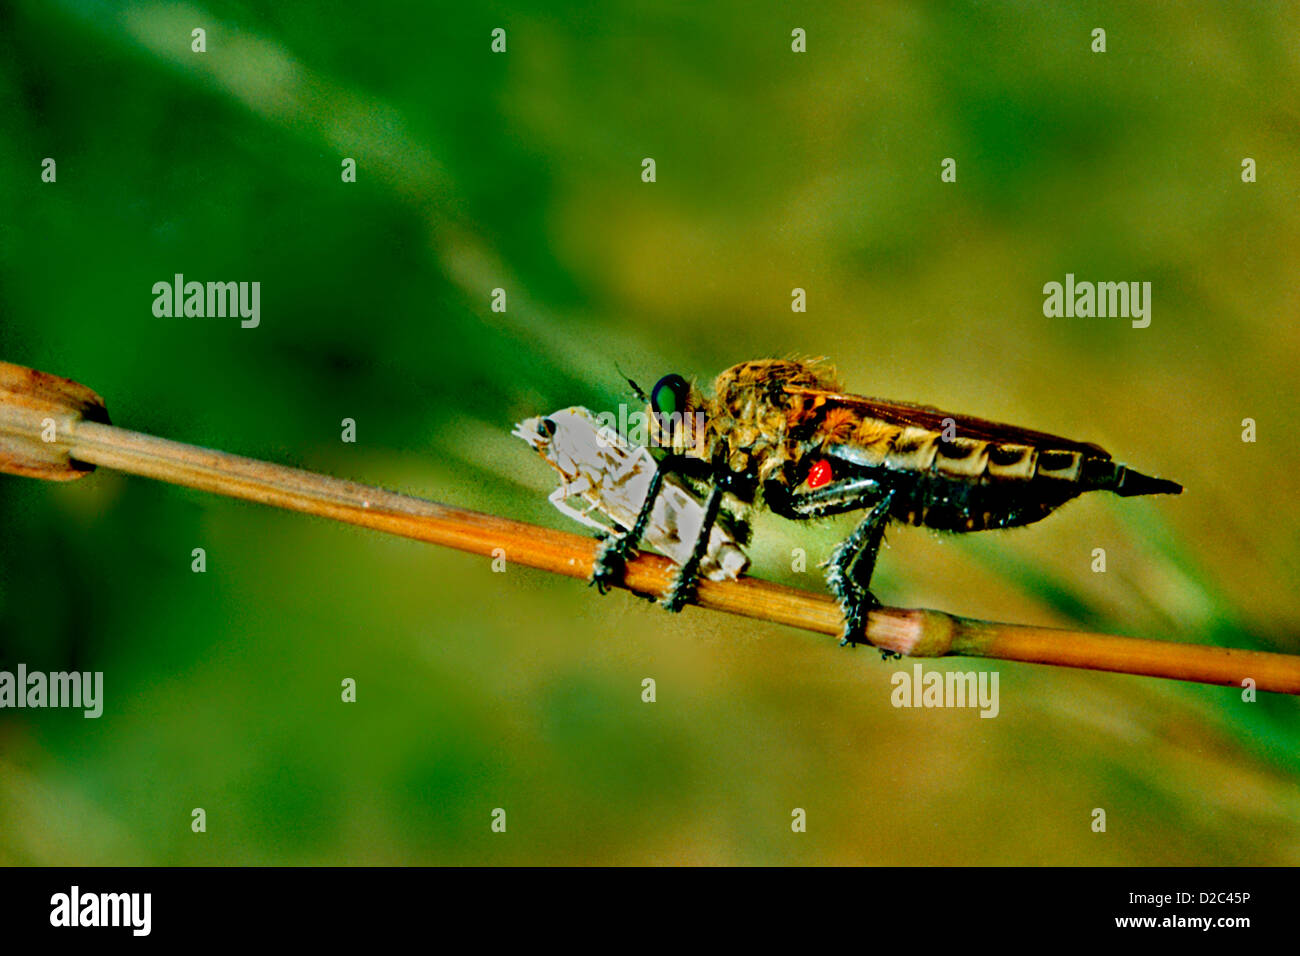 Robber Fly Insect With Prey At Sanjay Gandhi National Park, Borivali, Maharashtra, India Stock Photo